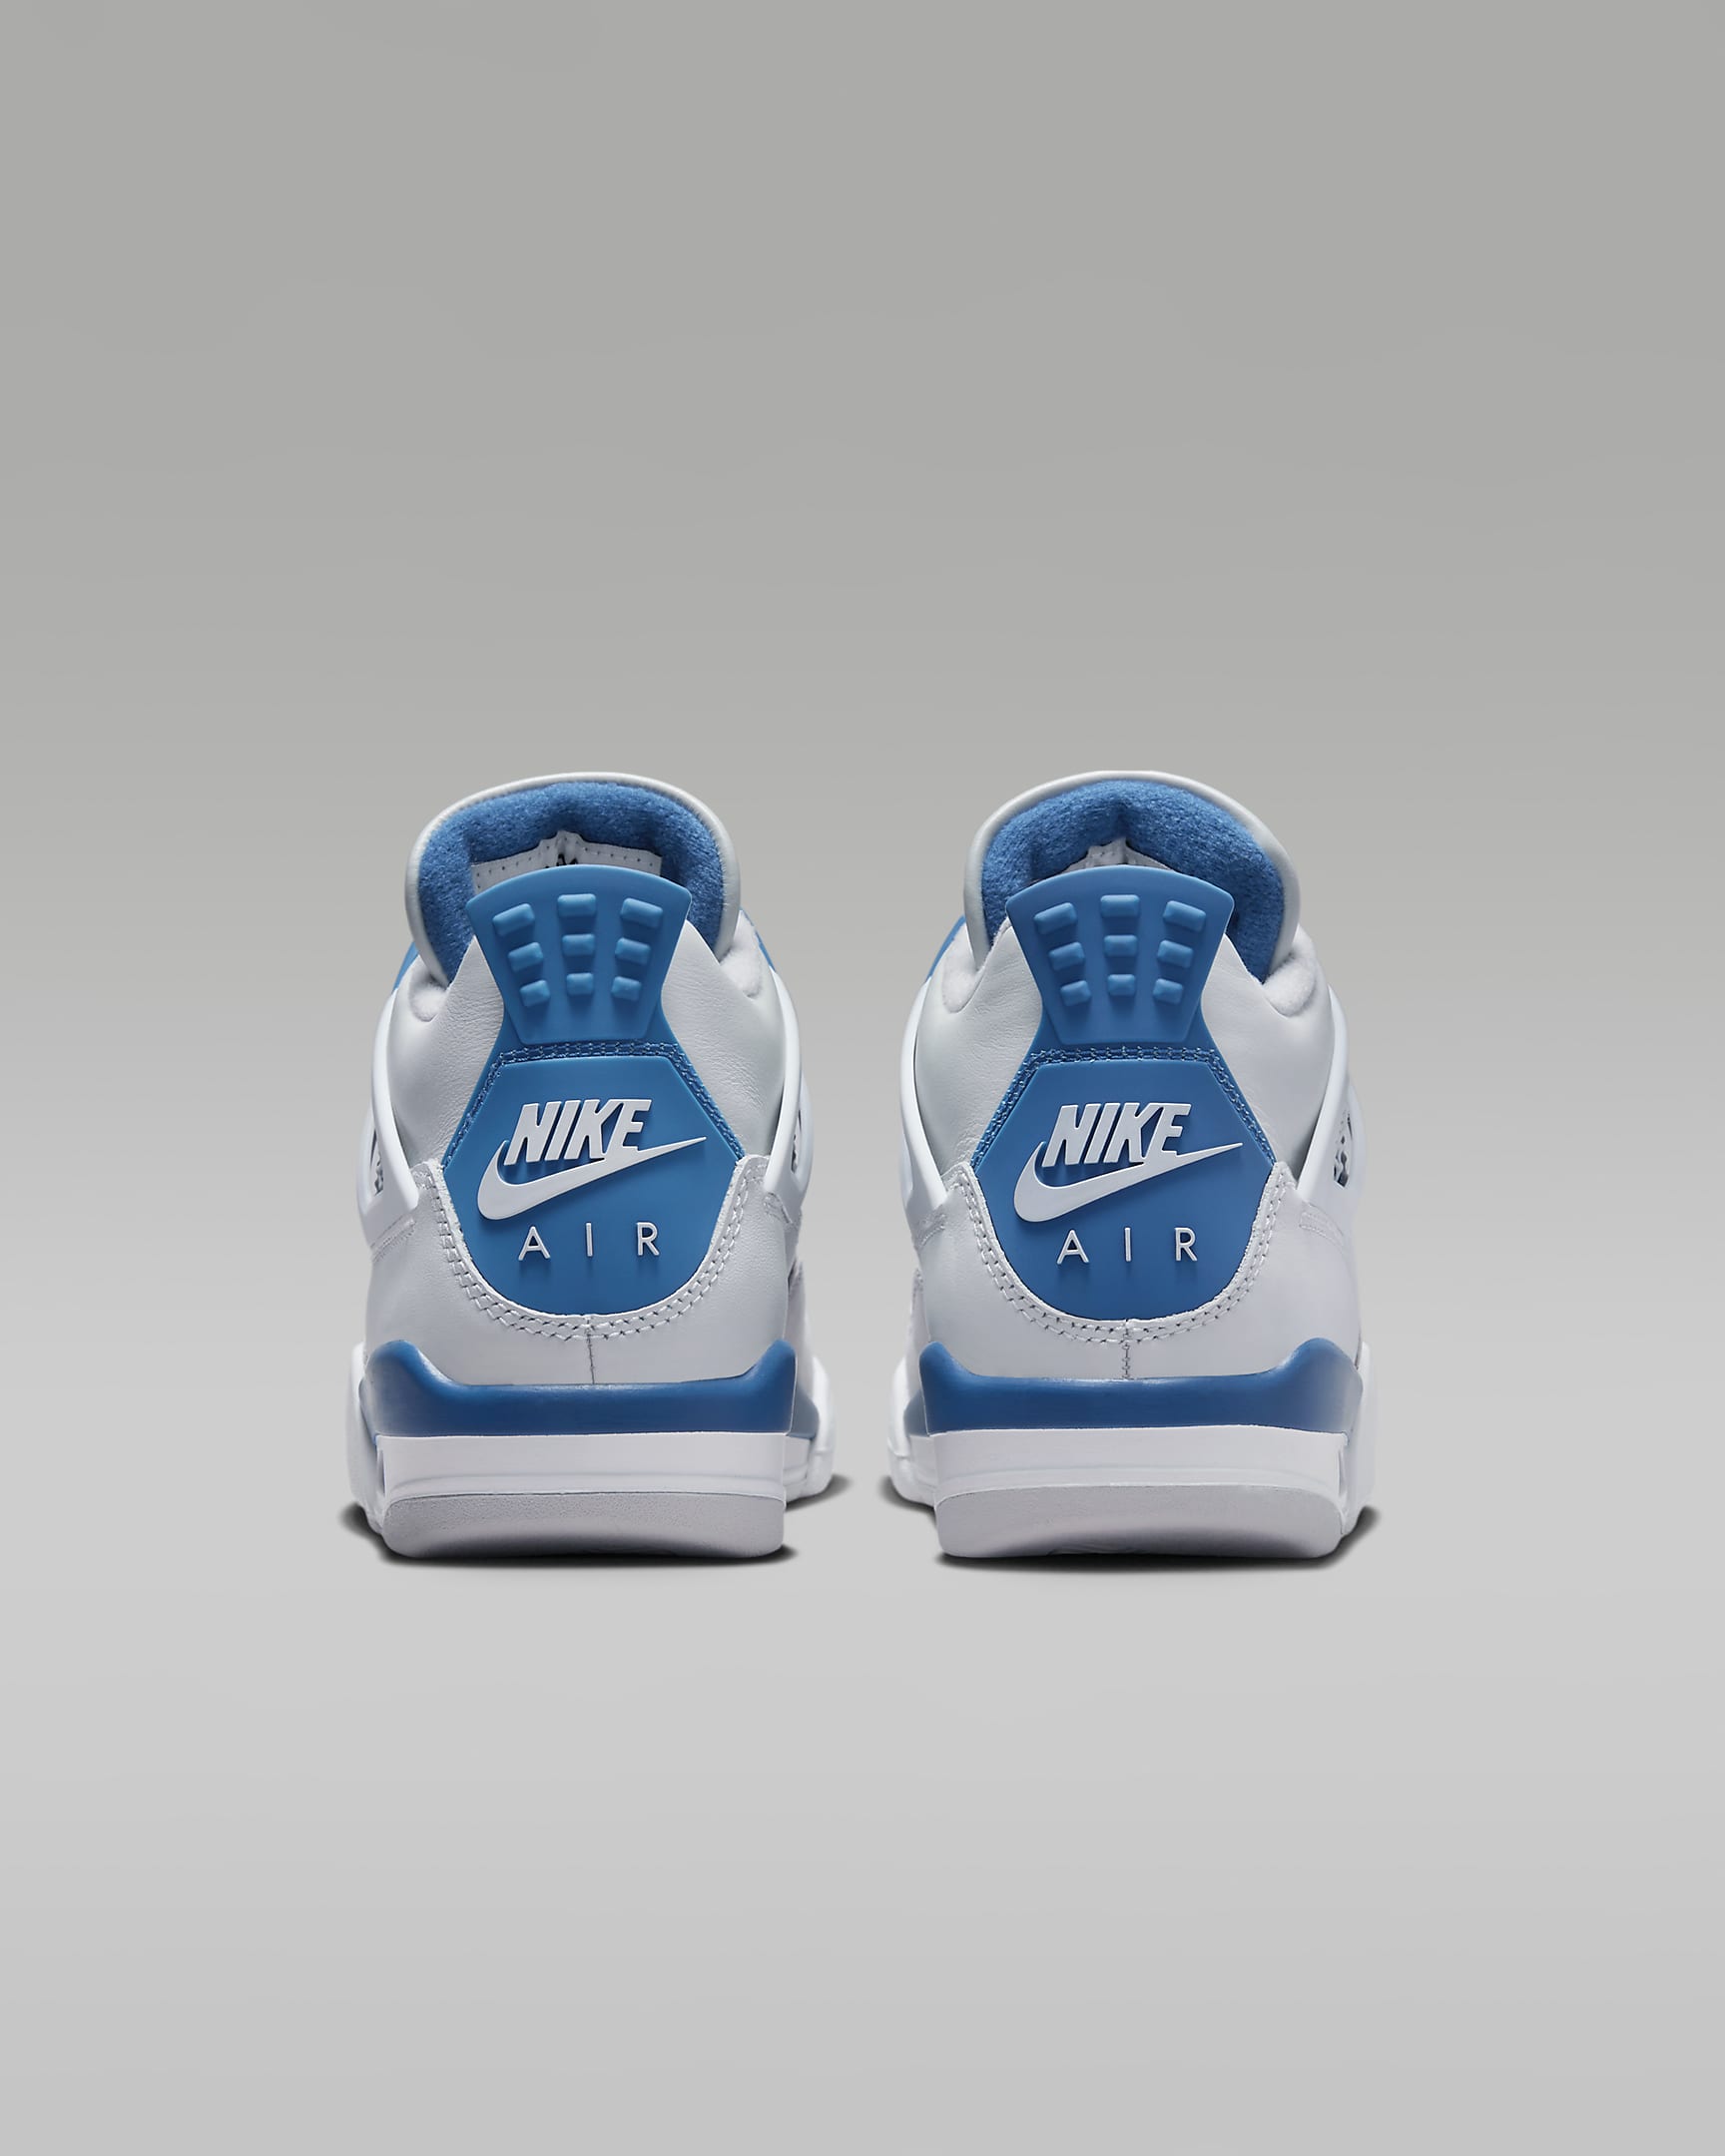 Air Jordan 4 Retro "Industrial Blue" Big Kids' Shoes - Off White/Neutral Grey/Military Blue